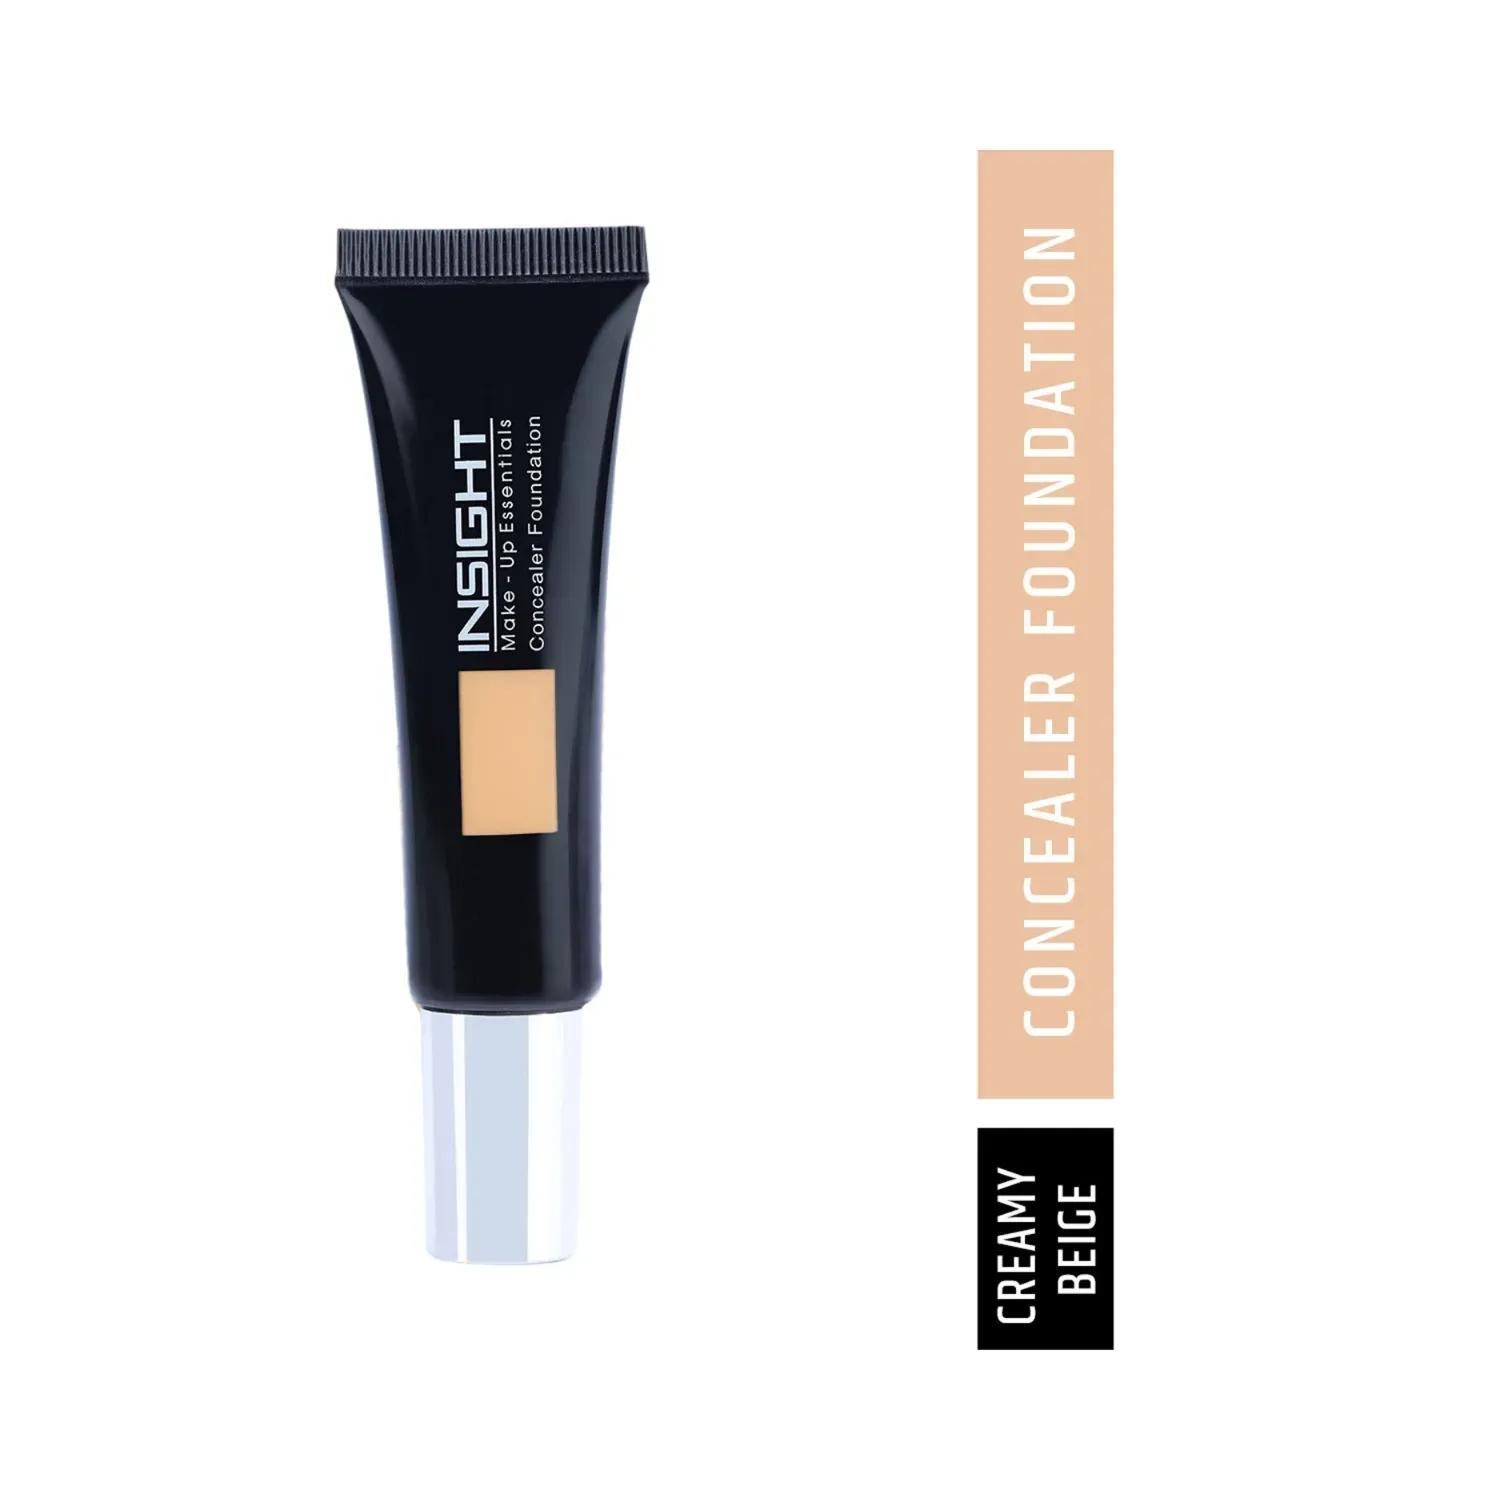 insight cosmetics concealer foundation - creamy beige (20ml)